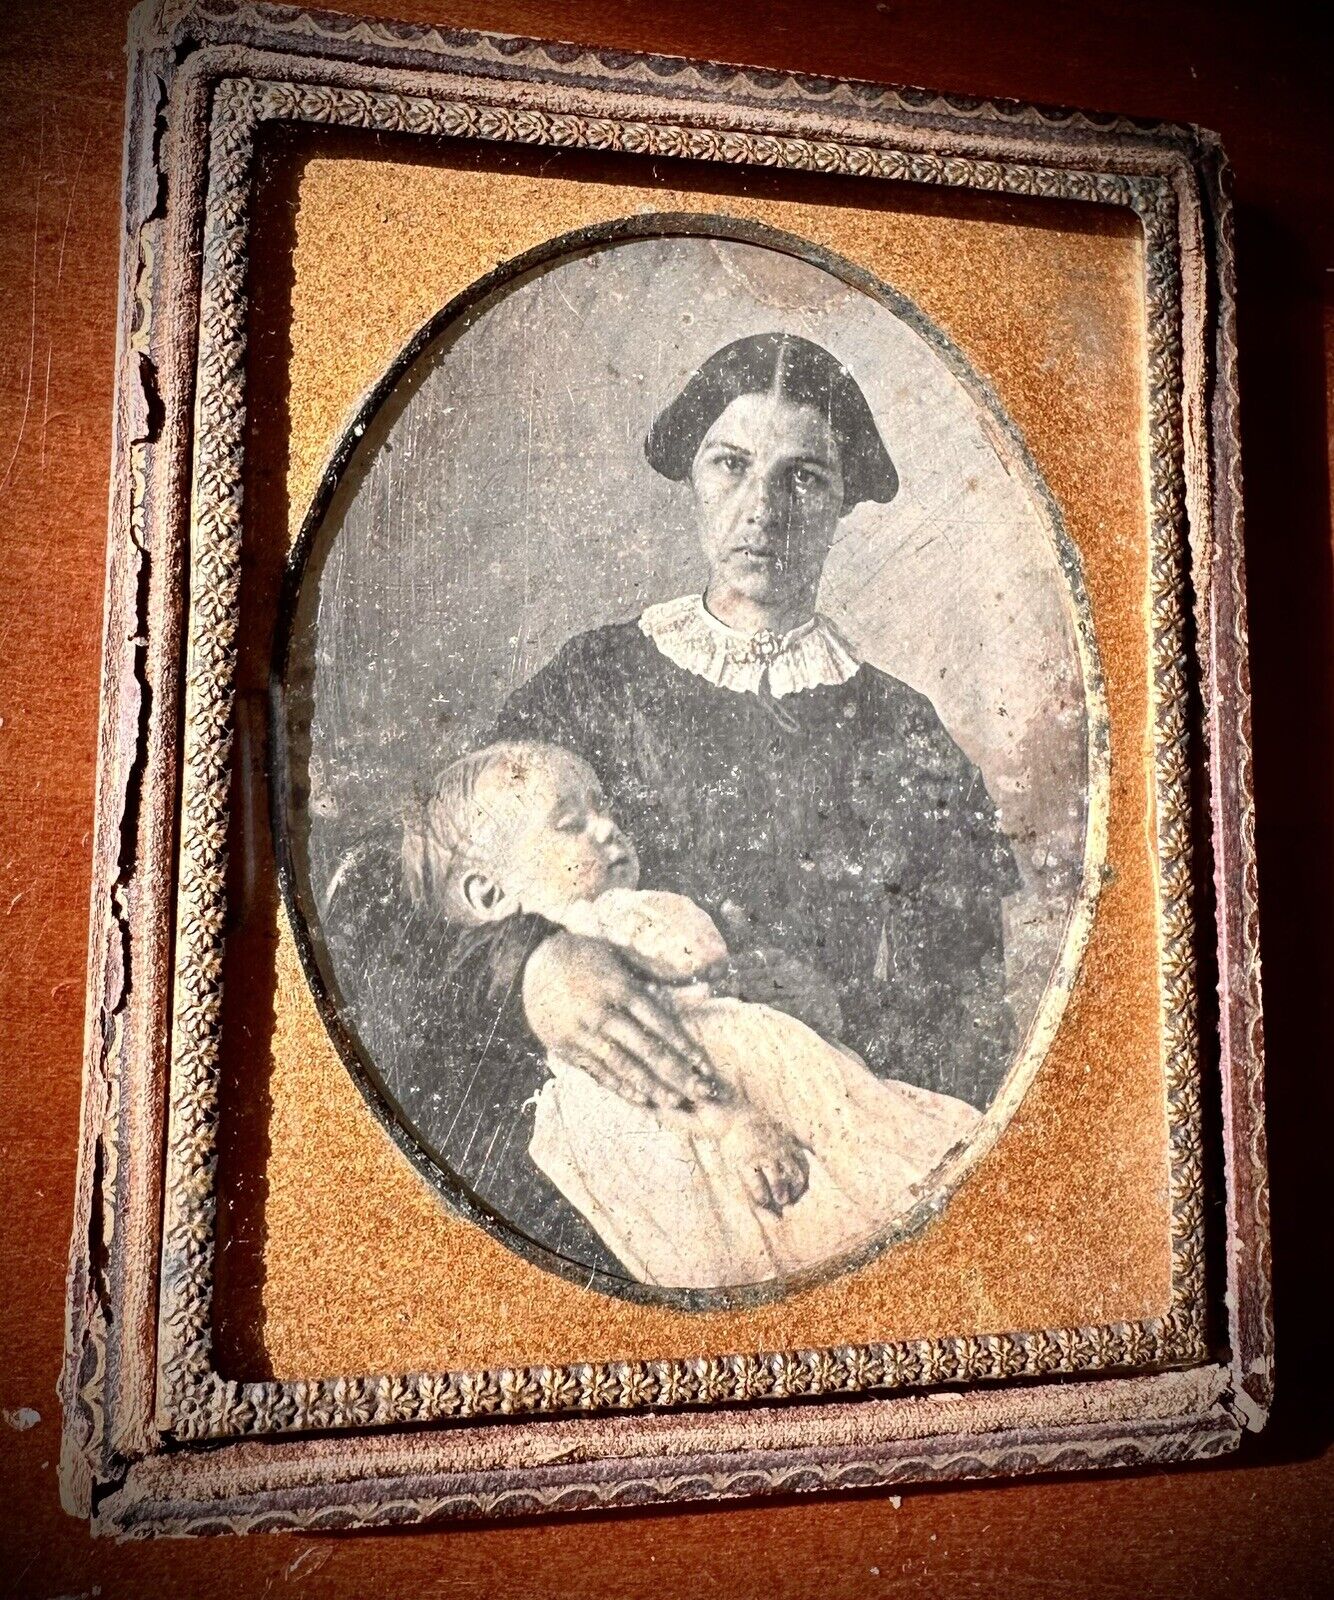 Post Mortem Daguerreotype Woman Holding Child 1800s